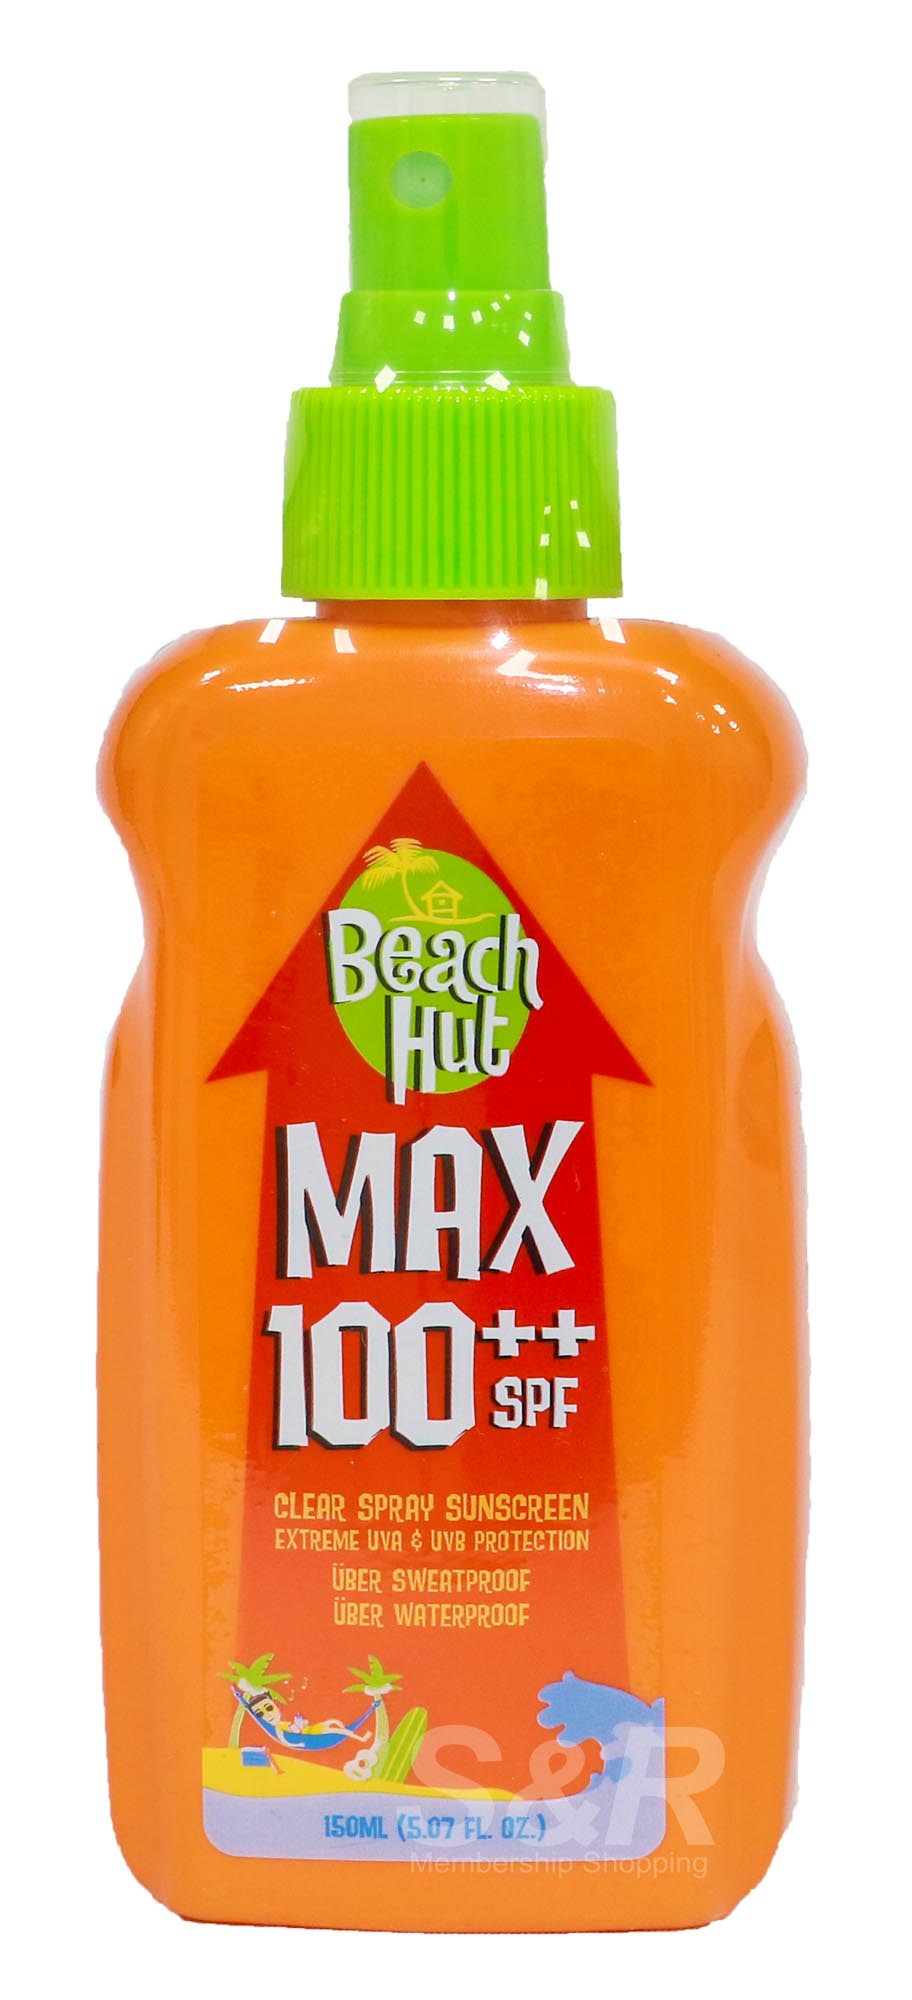 Beach Hut Max 100++ SPF Clear Spray Sunscreen